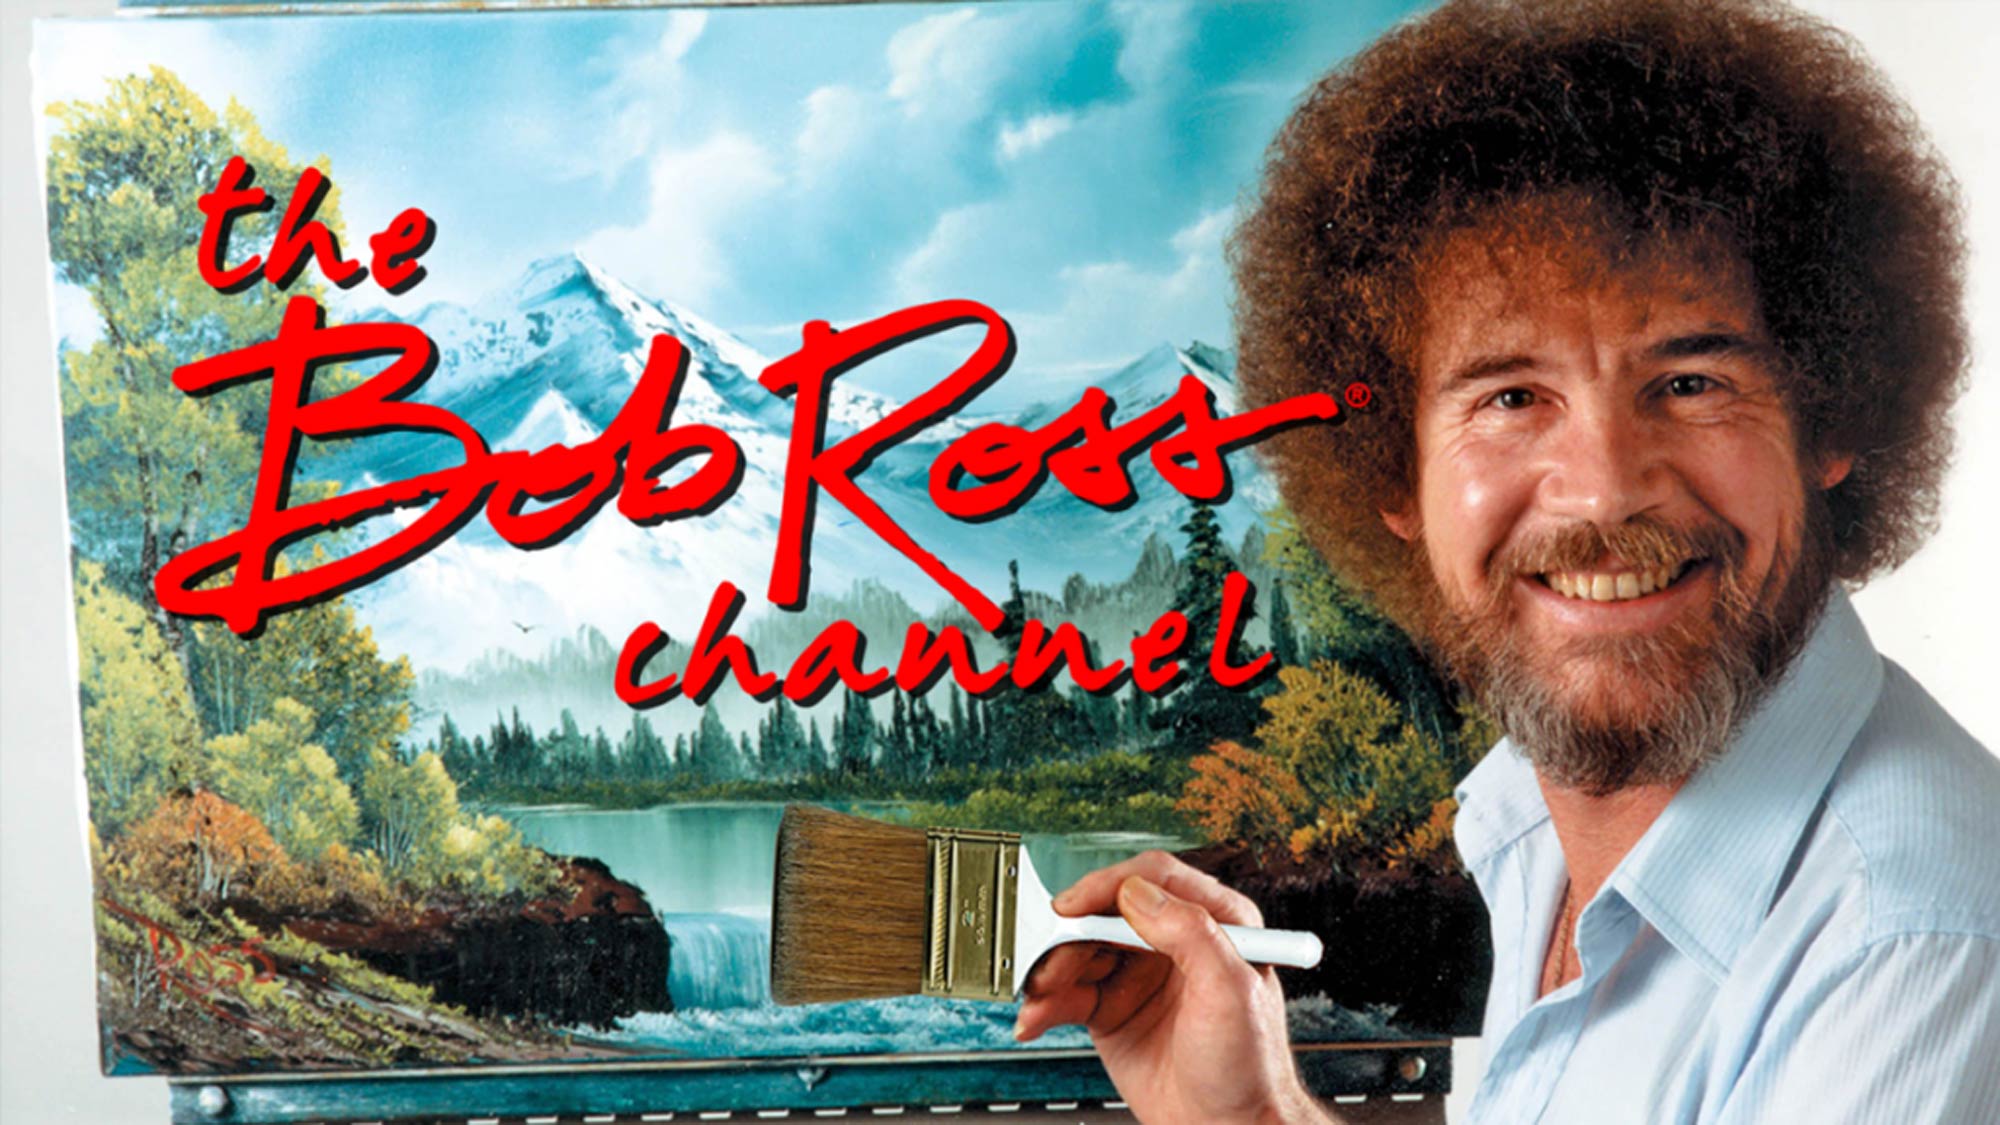 Free roku channels: The Bob Ross Channel